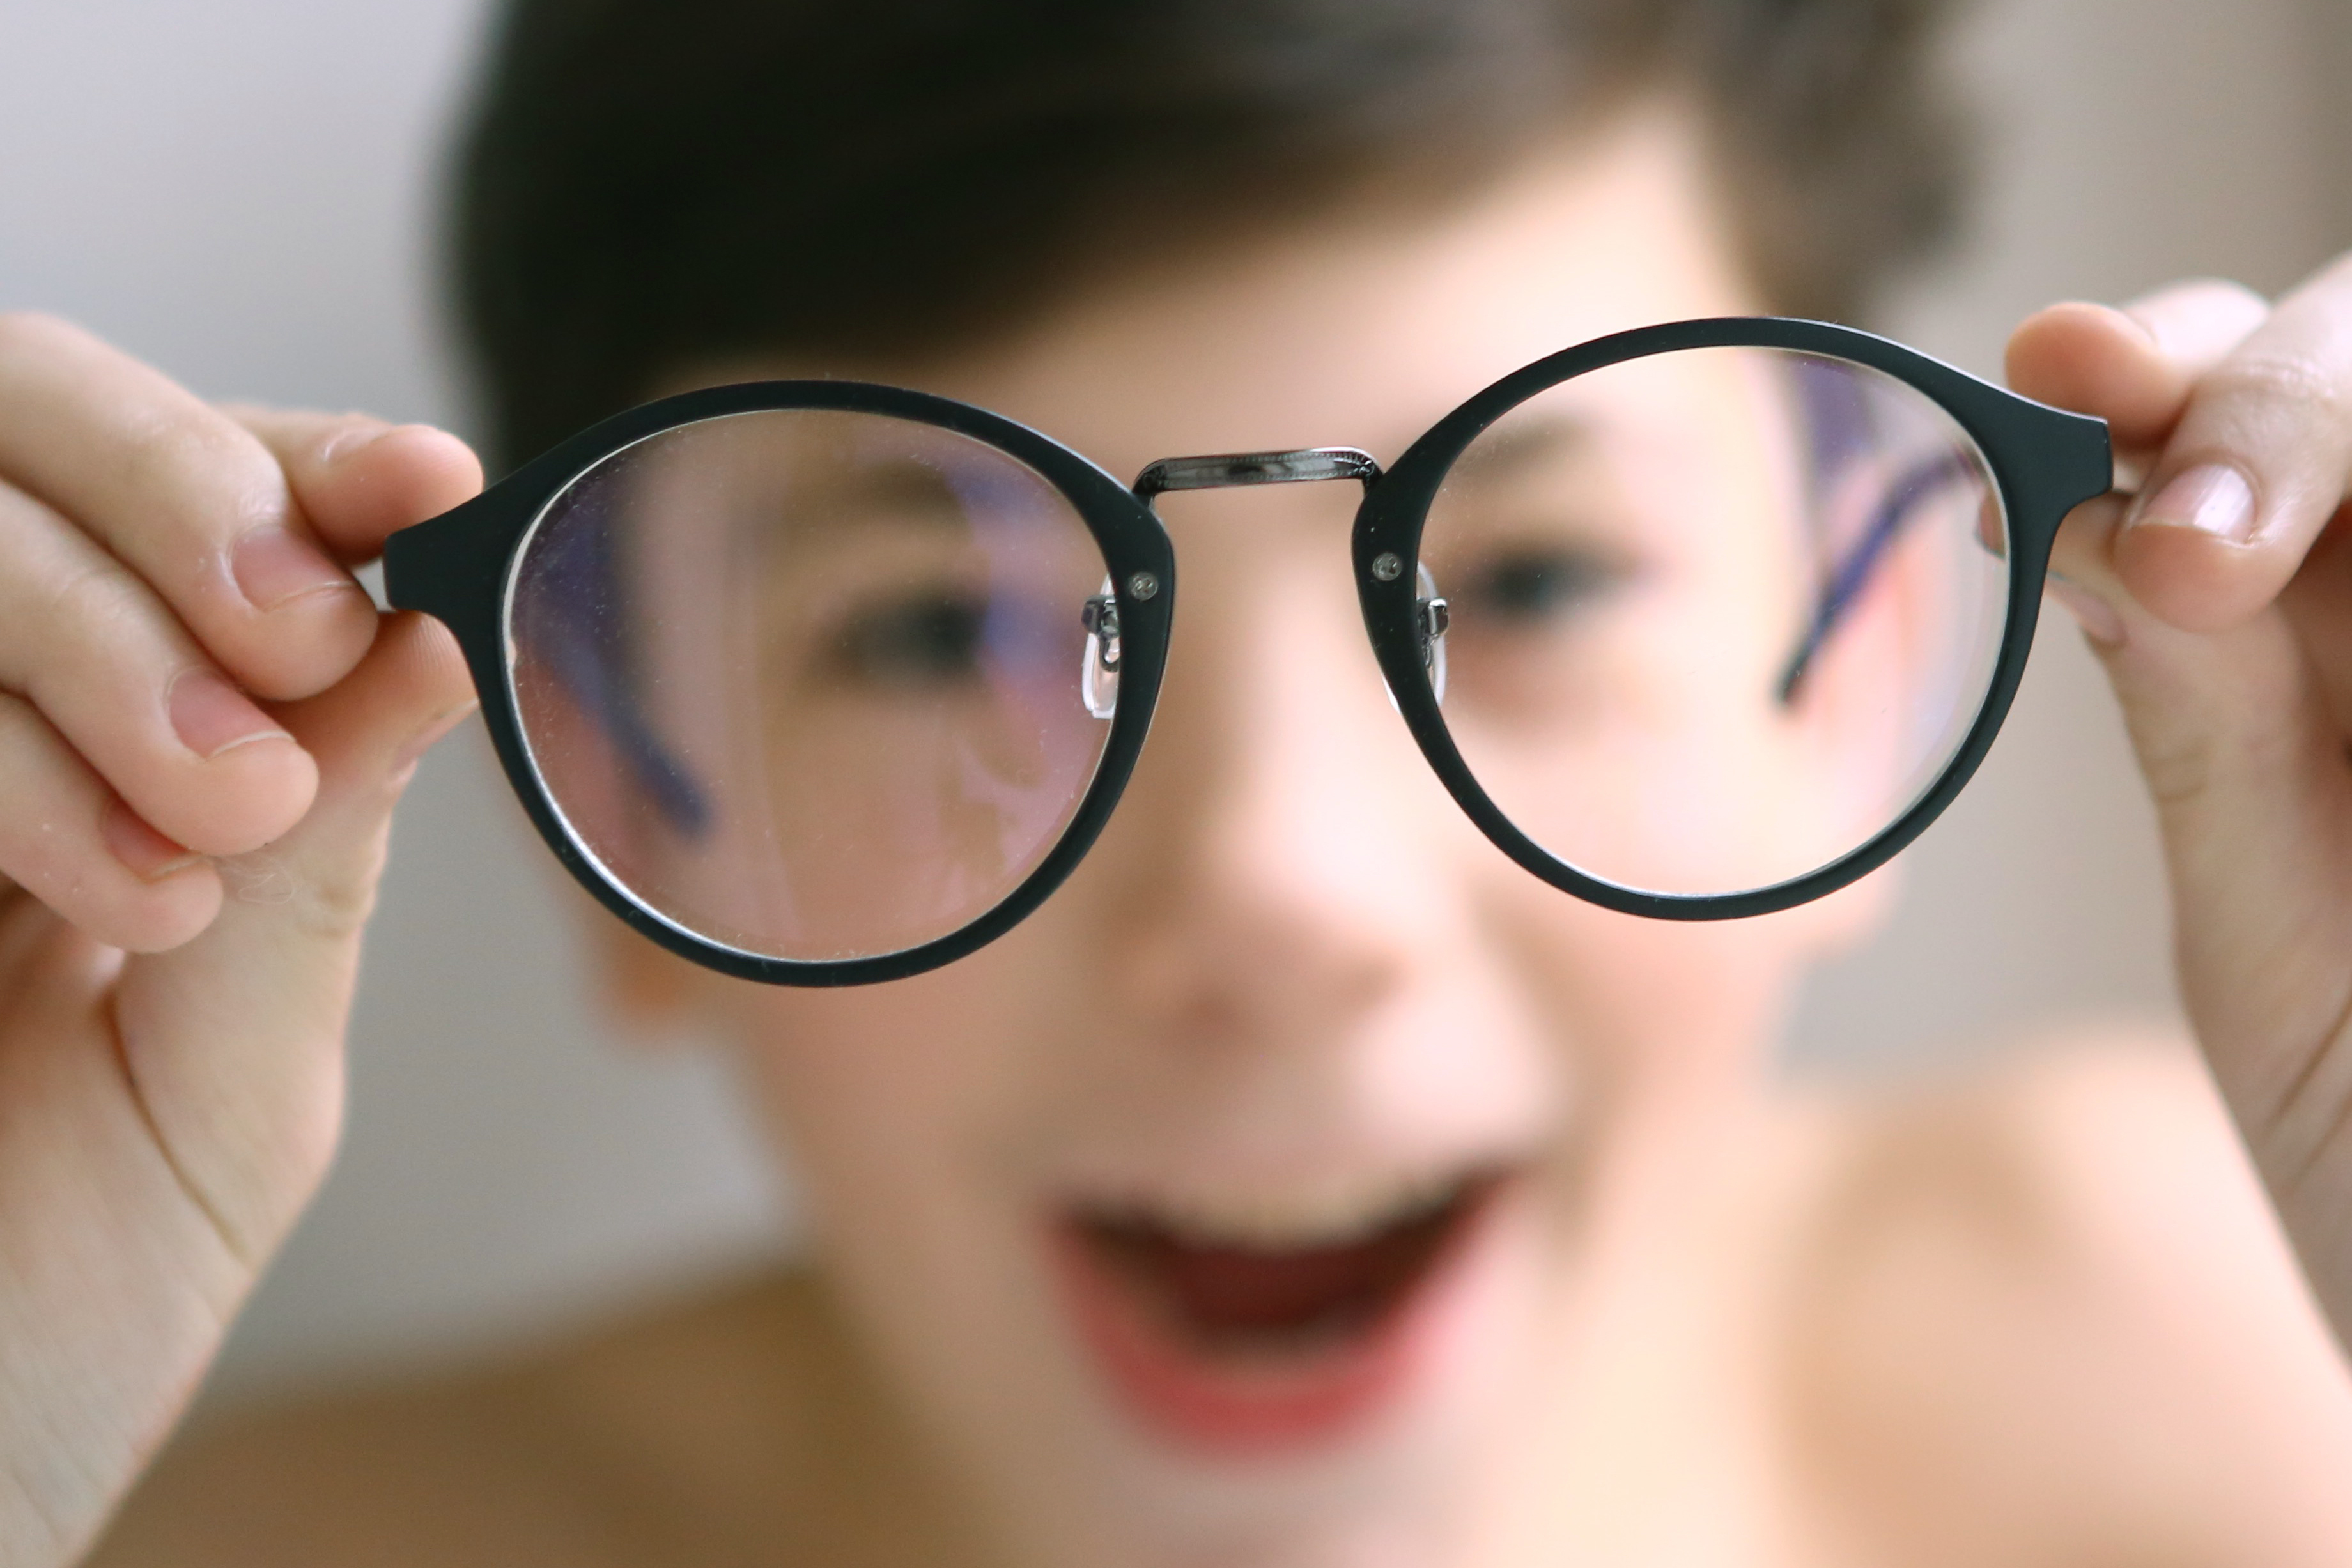 boy-peering-through-glasses